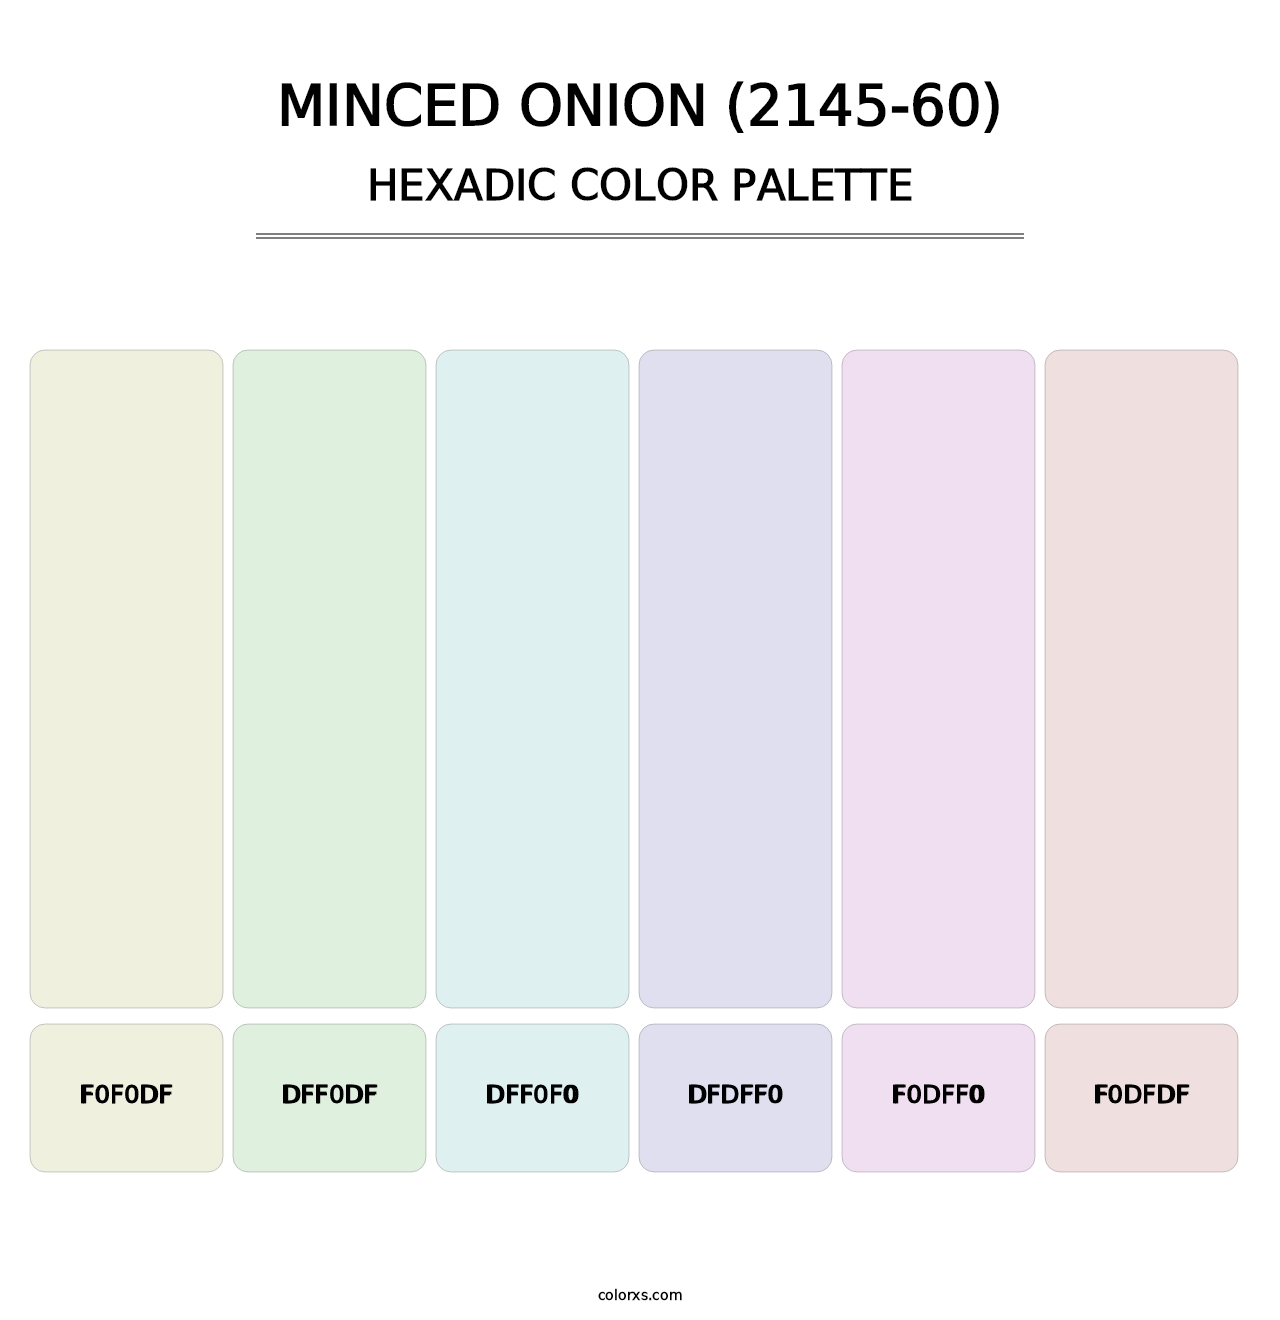 Minced Onion (2145-60) - Hexadic Color Palette